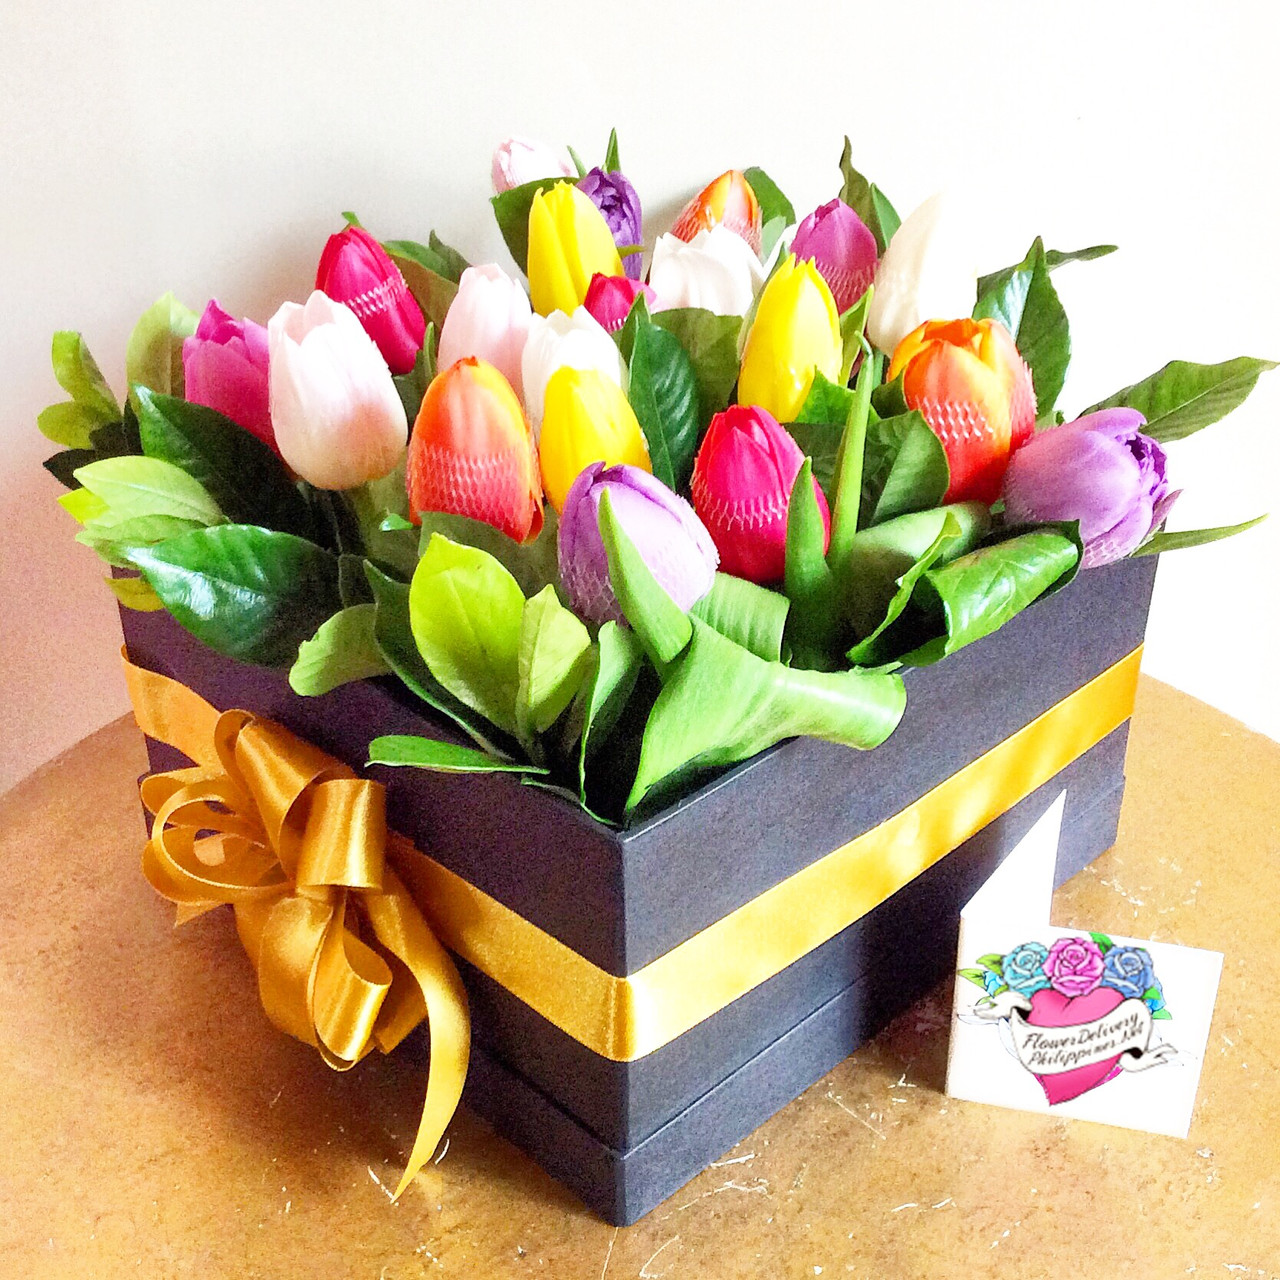 Holland Tulips Philippines